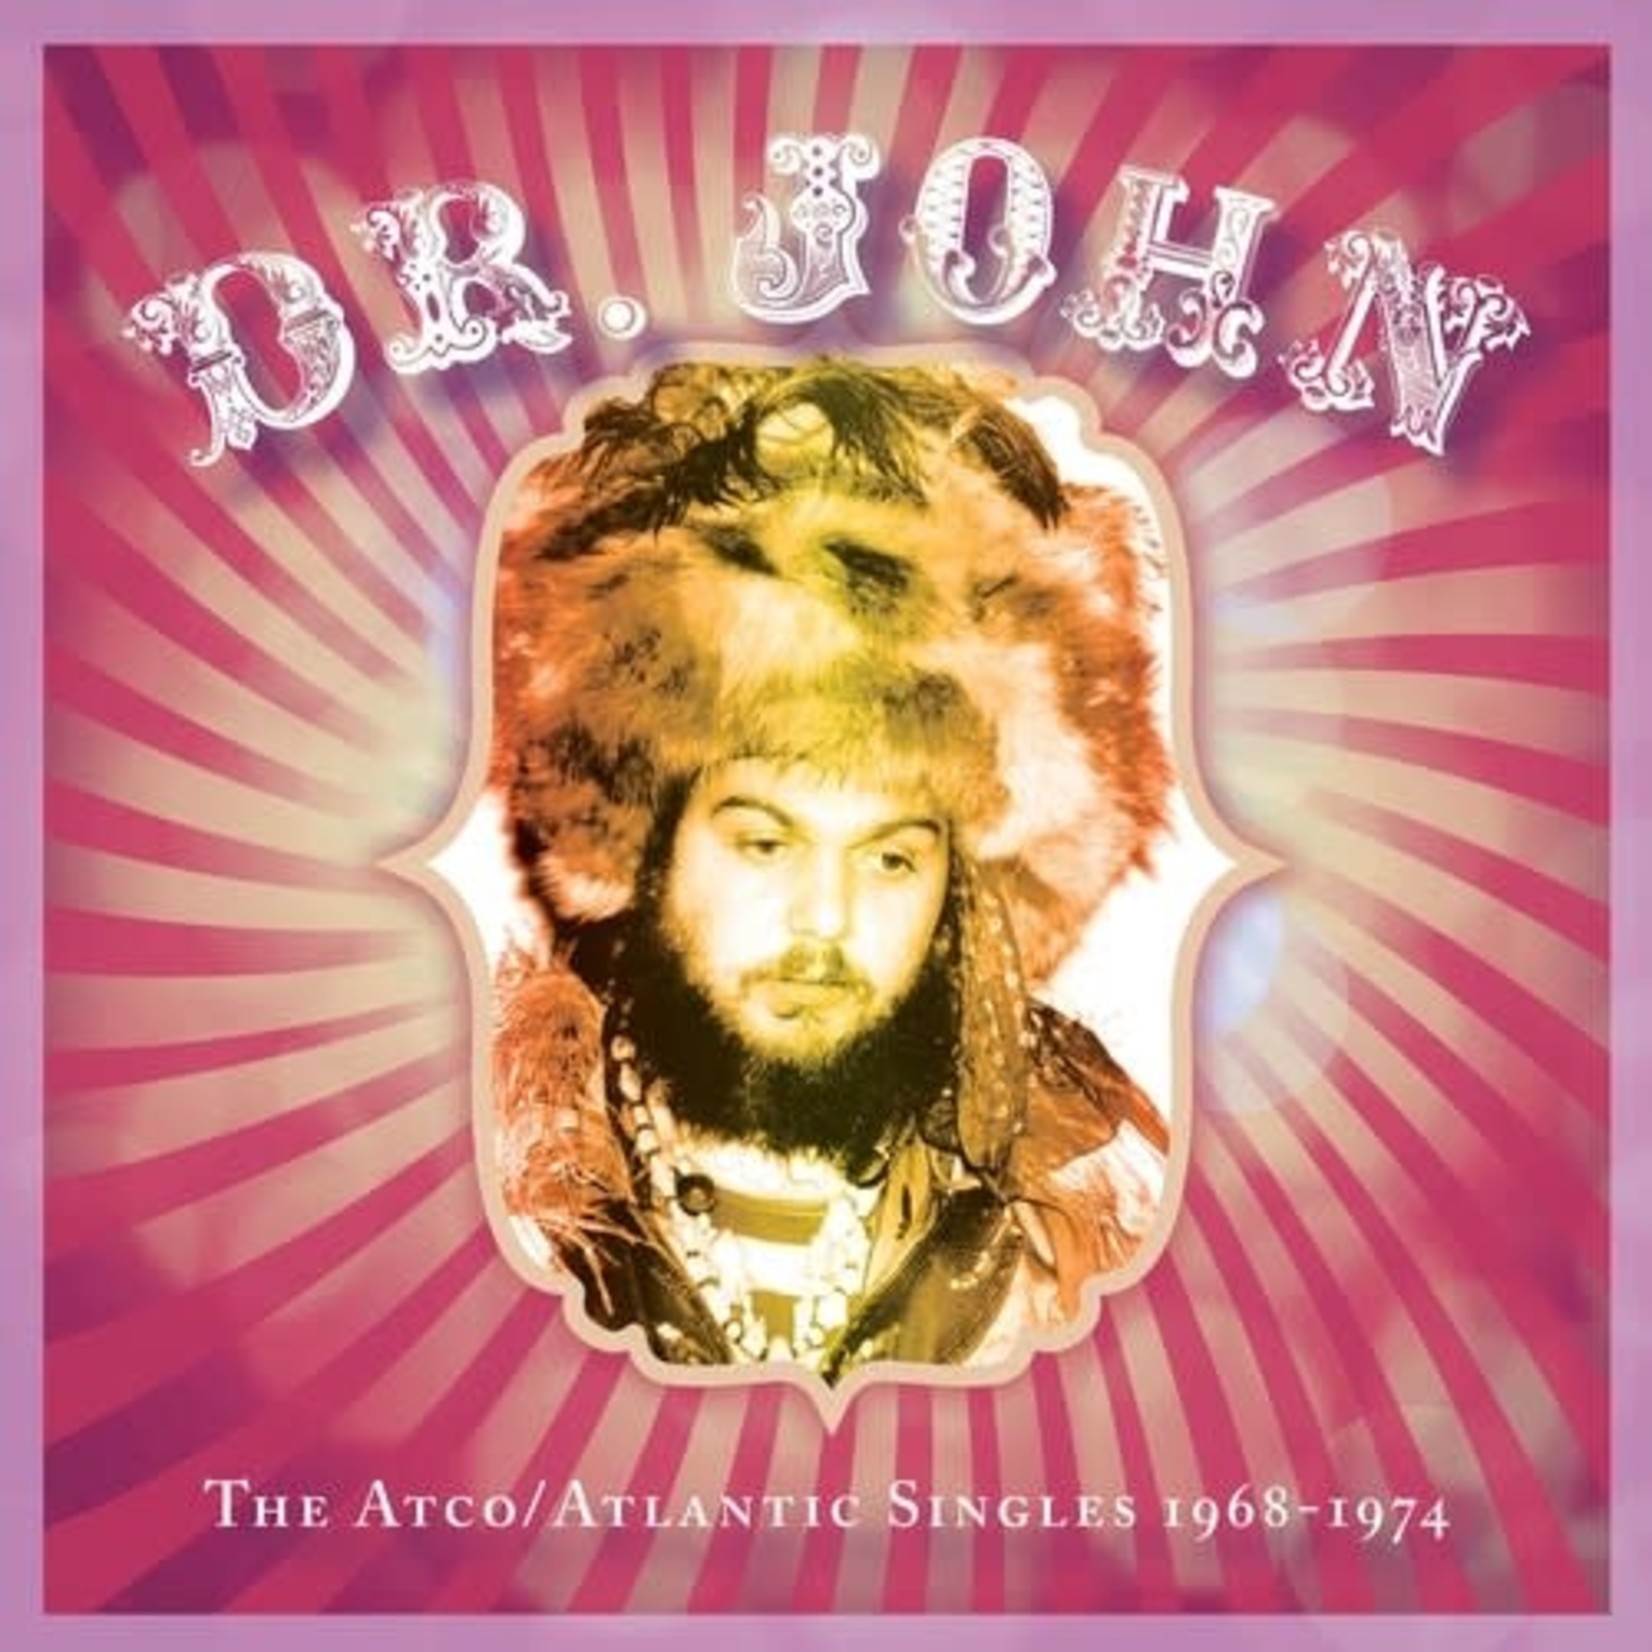 Dr. John - The Atco/Atlantic Singles 1968-1974 [CD]